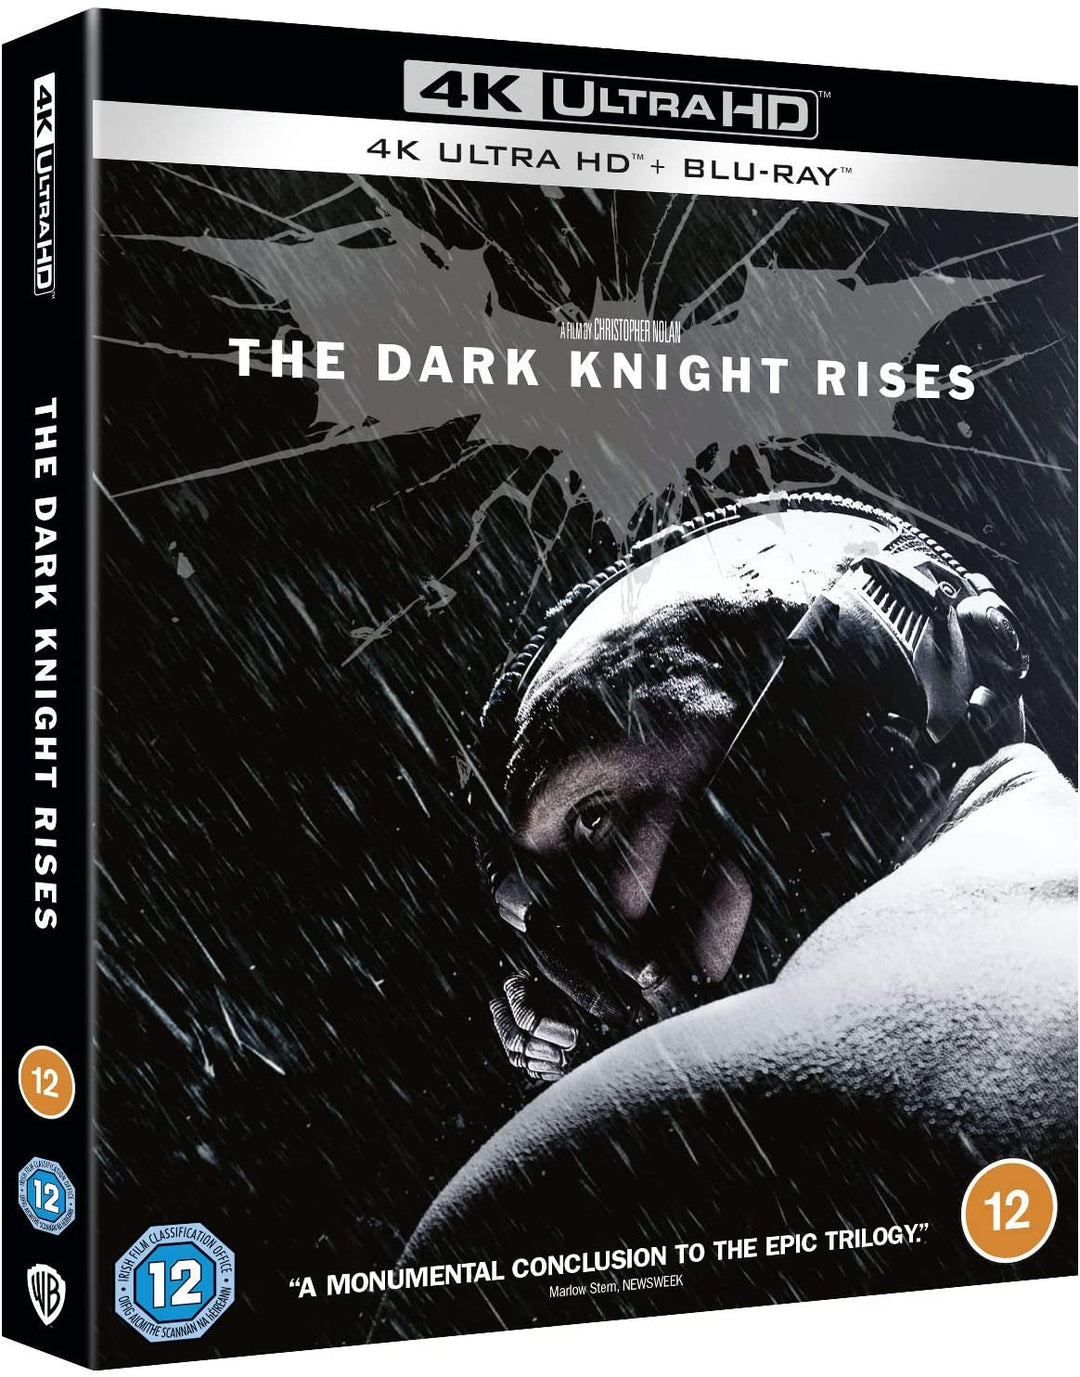 The Dark Knight Rises [2012] [Region Free] – Action/Thriller [Blu-ray]